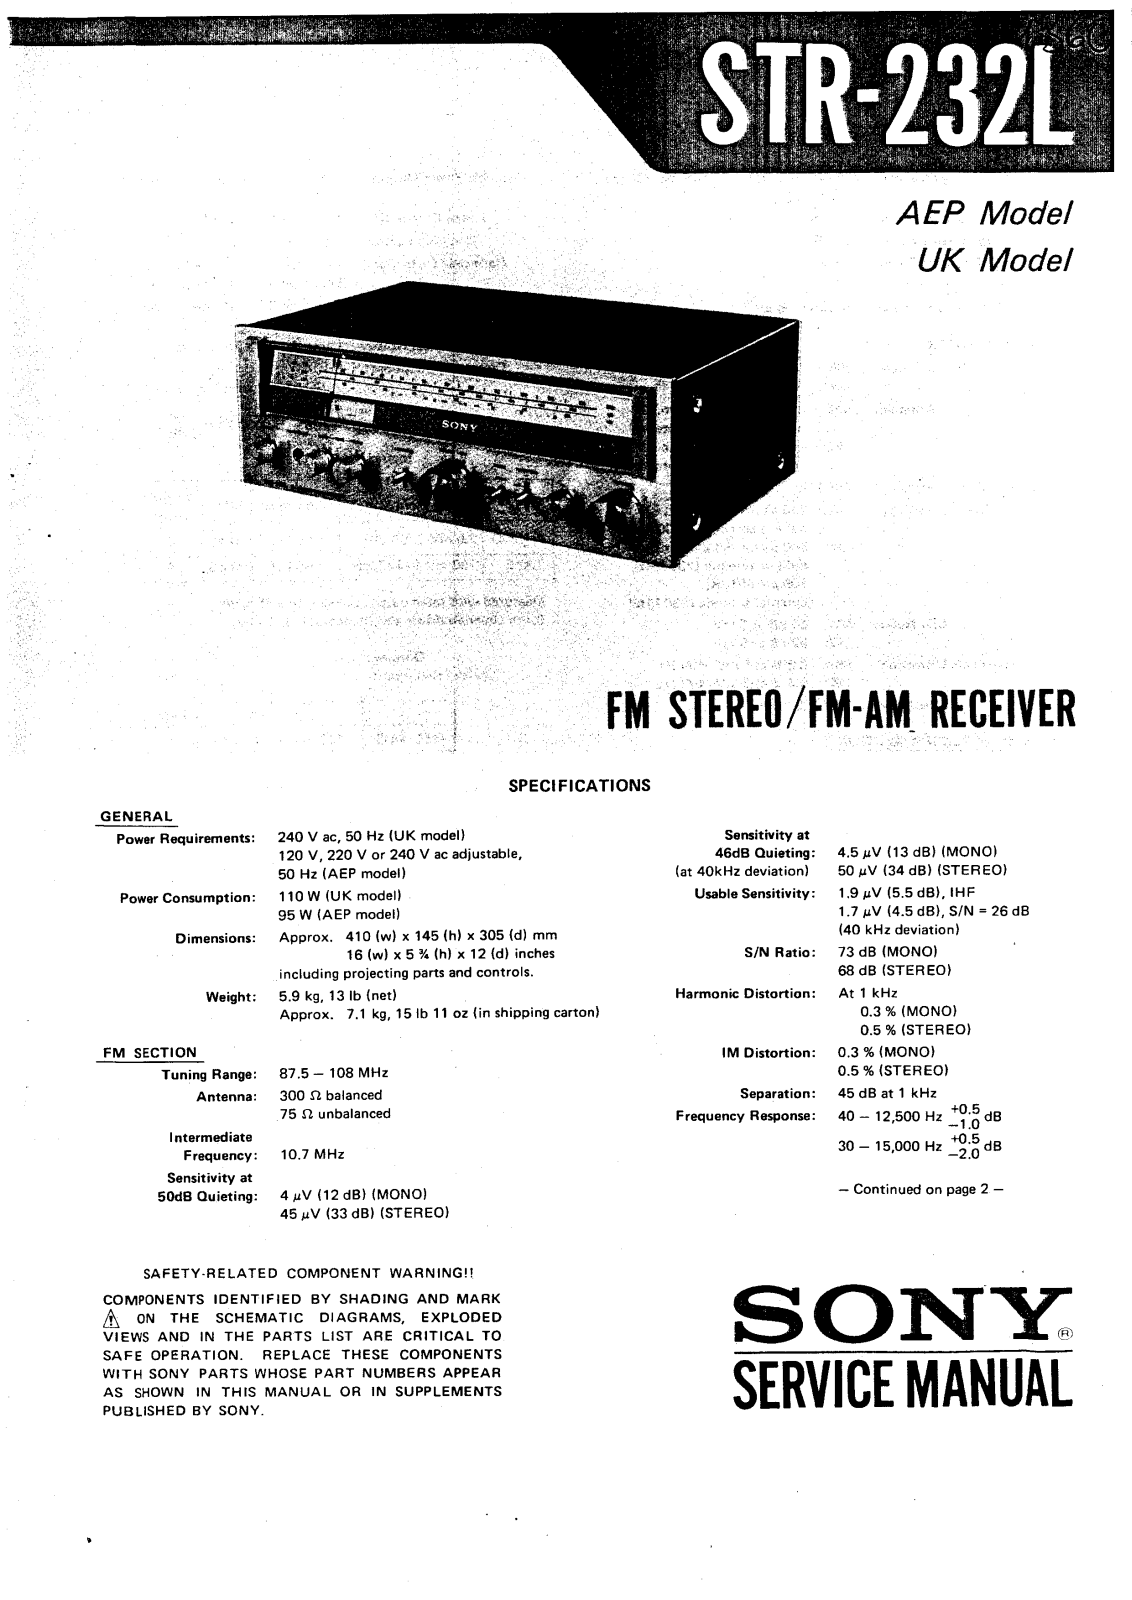 Sony STR-232L Service Manual